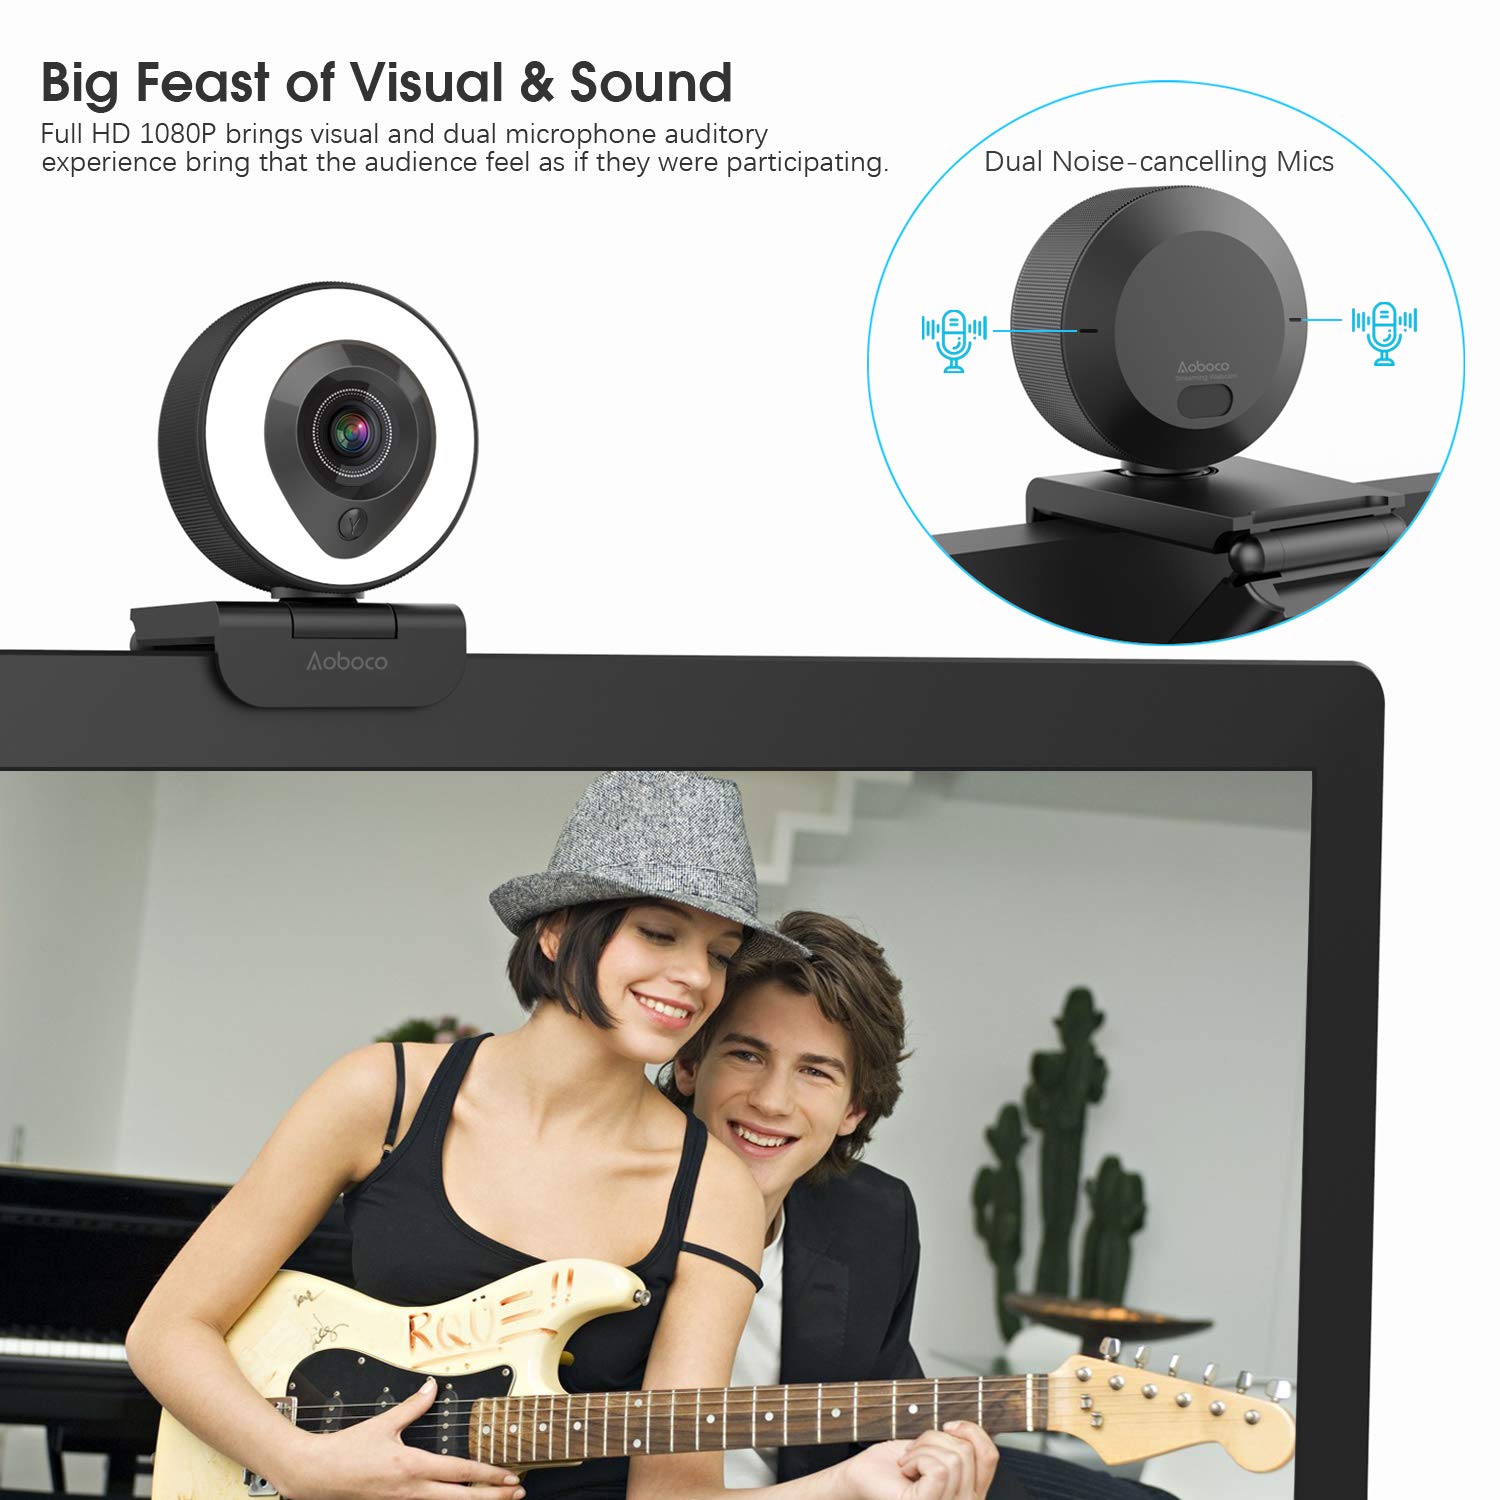 How to flip webcam image skype for mac 7.5 pro